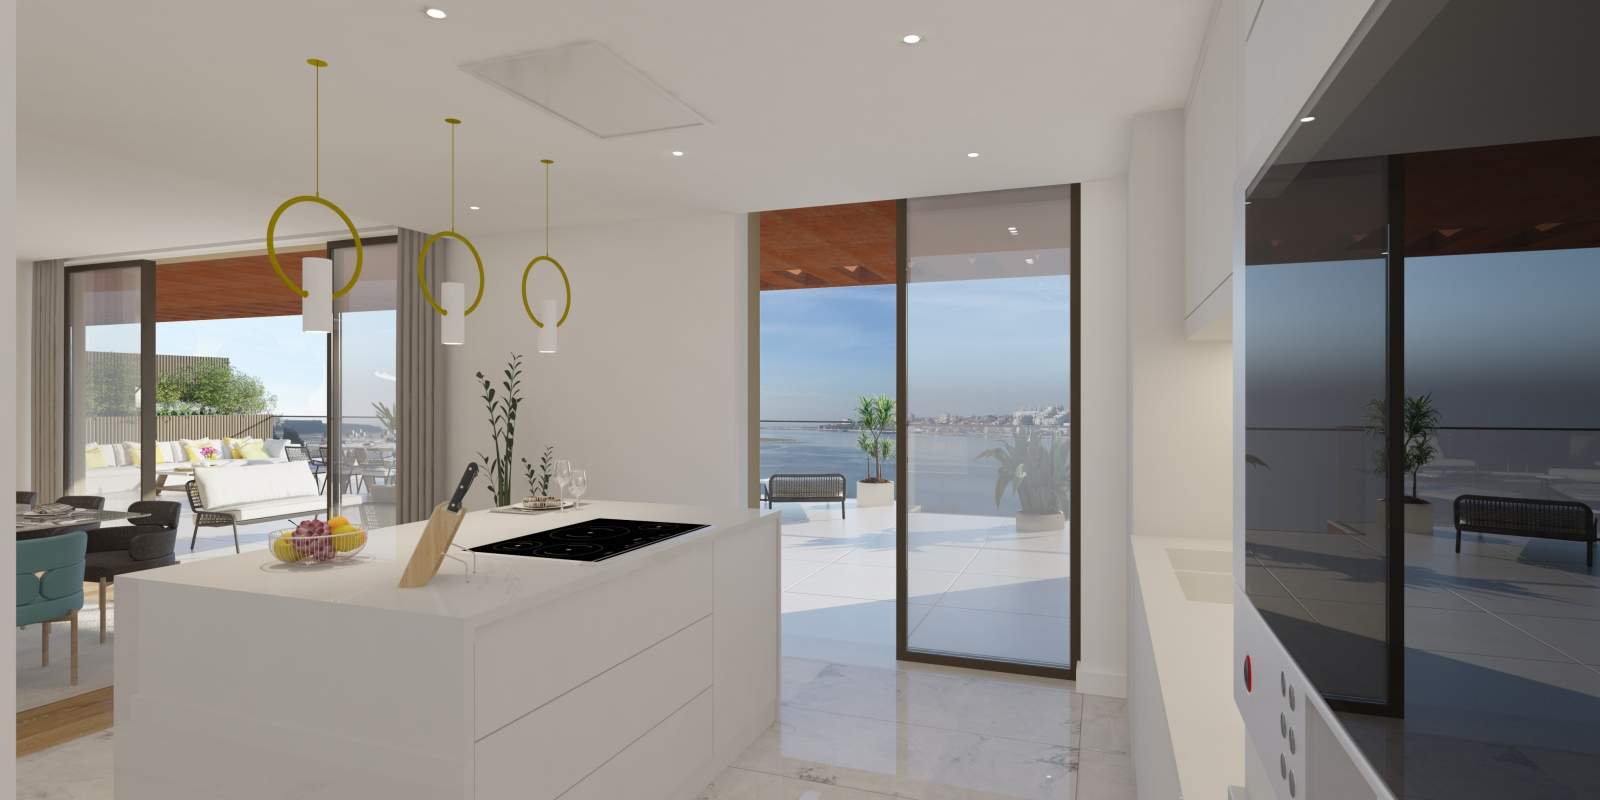 Apartment for sale with terrace, in exclusive condominium, V. N. Gaia, Porto, Portugal_175764